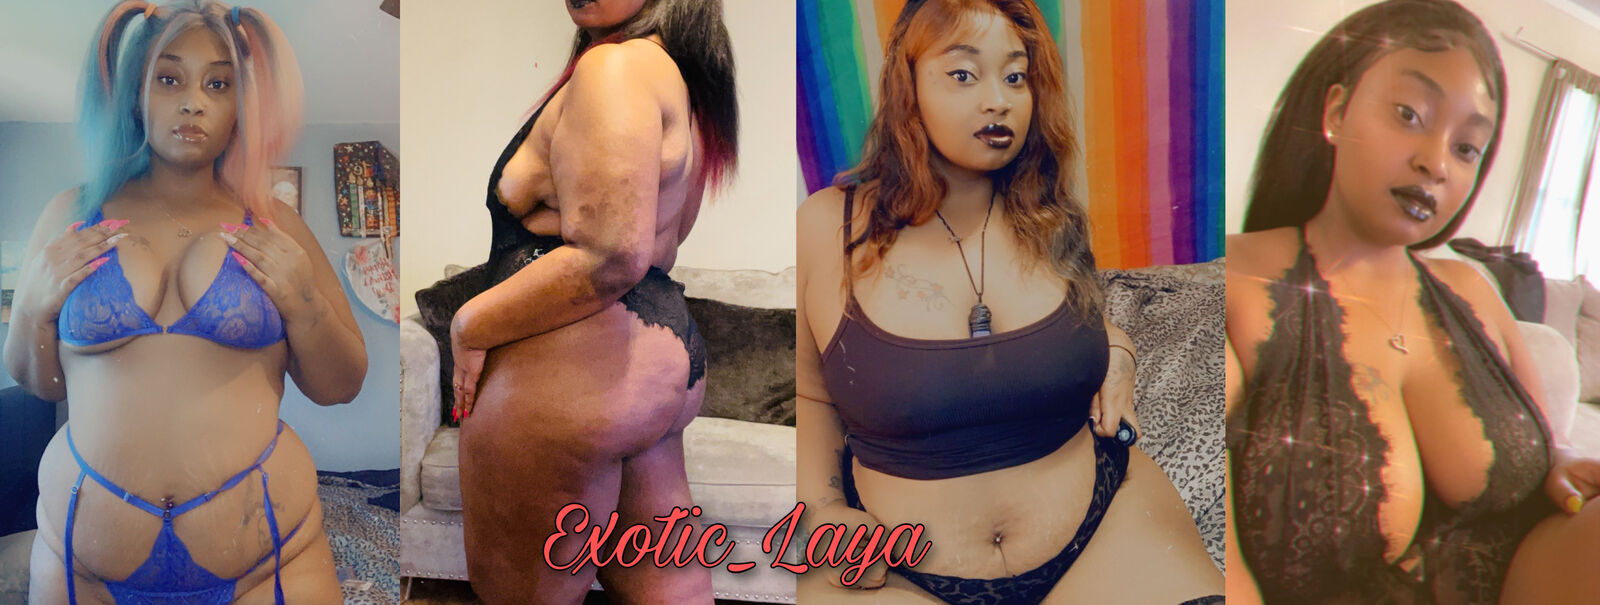 See Exotic_Laya profile